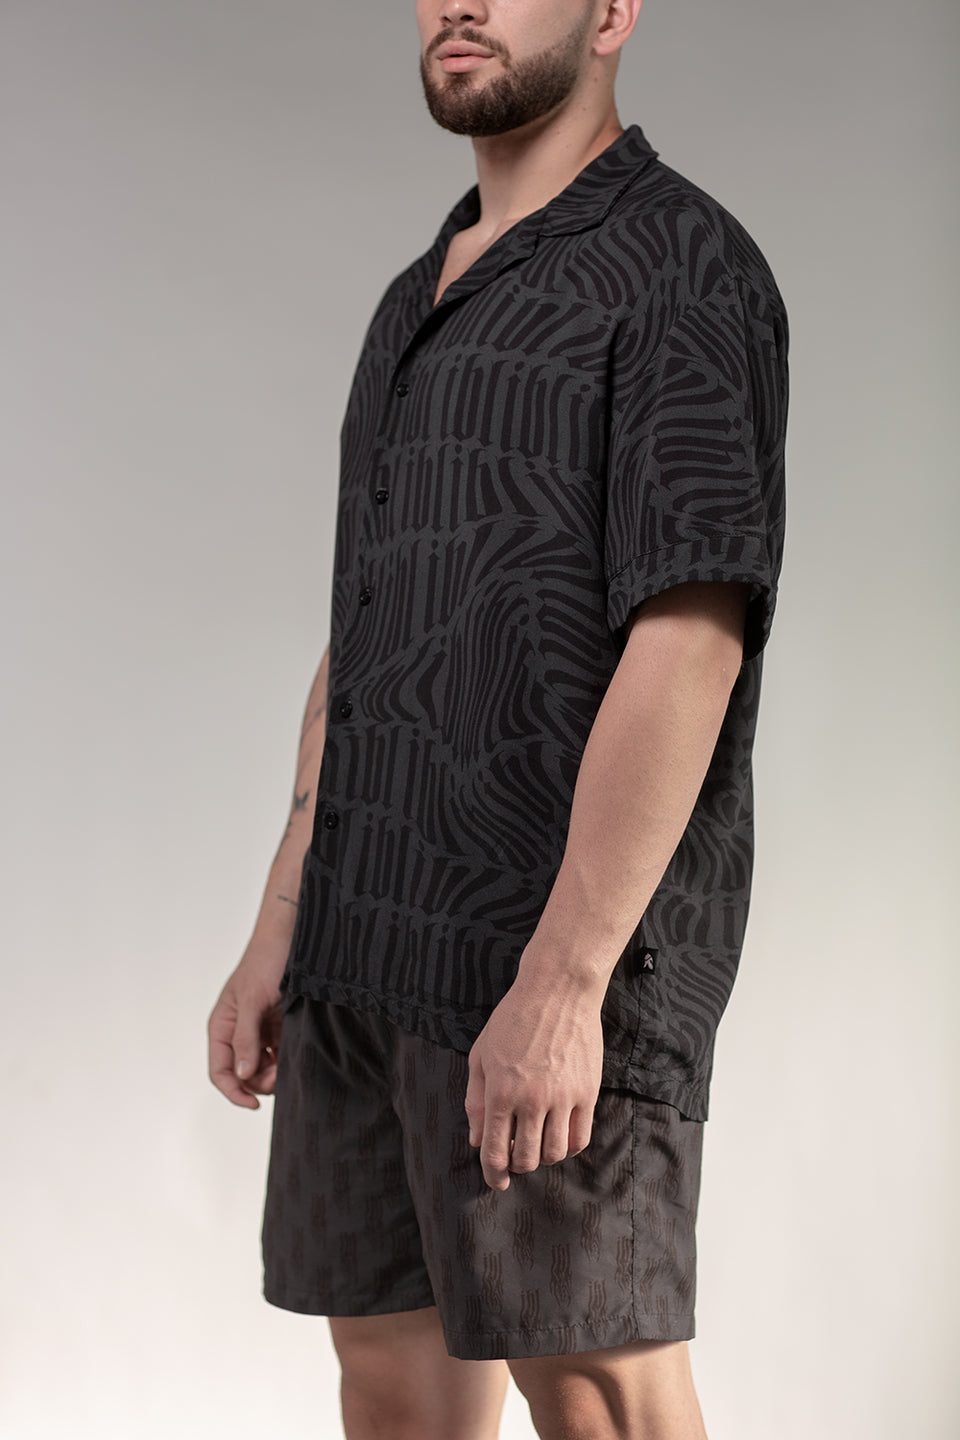 Distorted Illyrian Shirt - Black